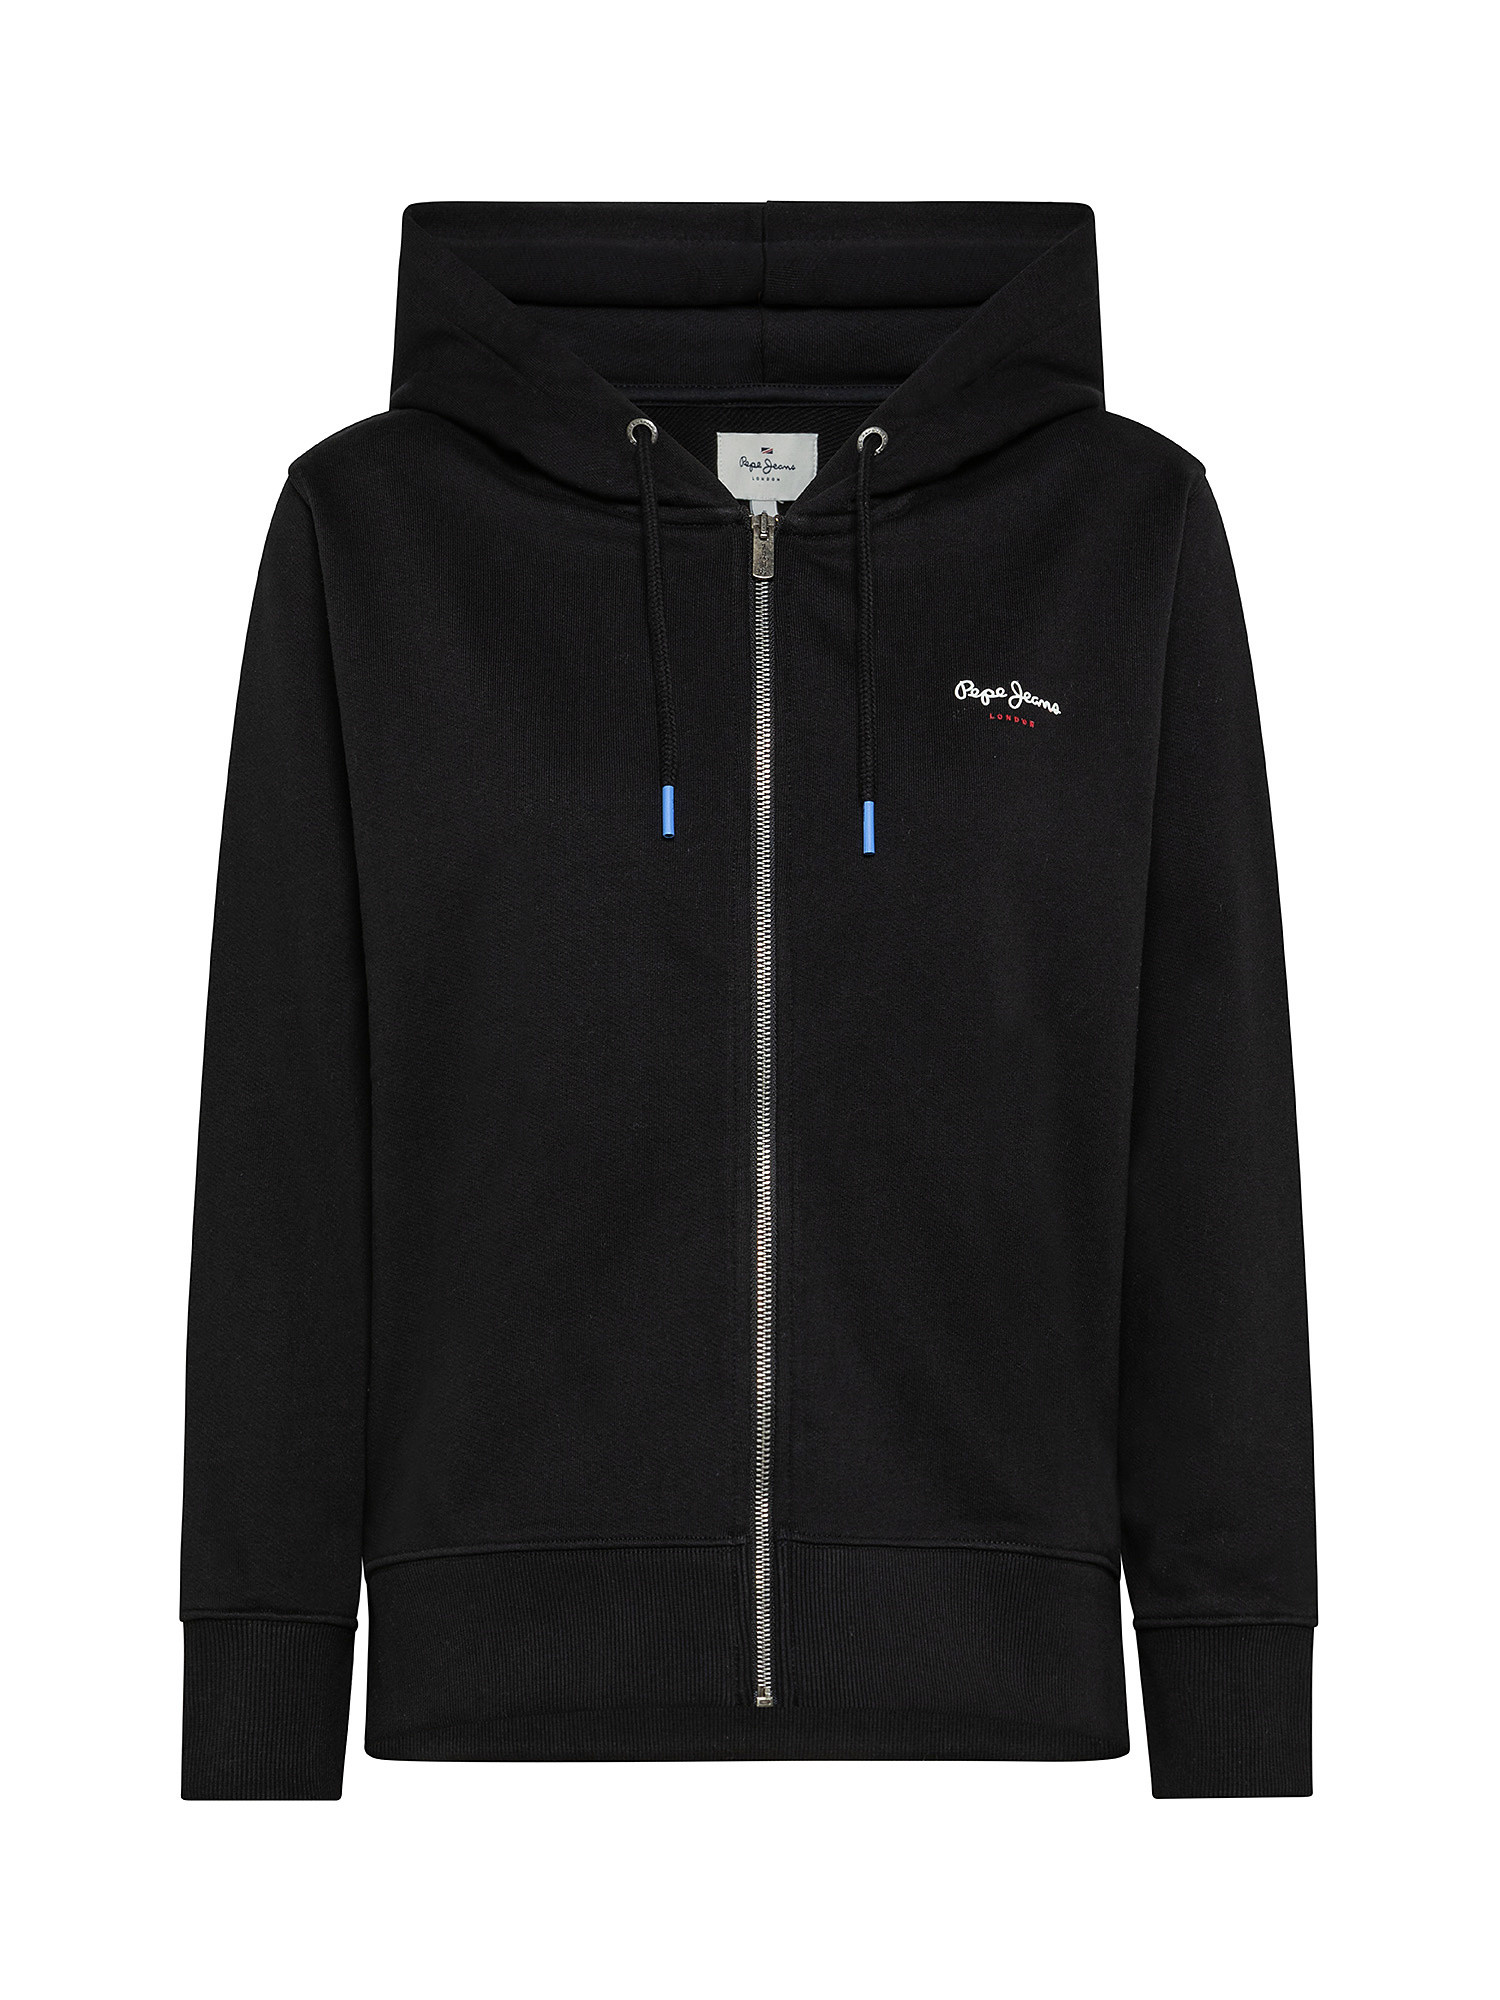 Calista zipper sports sweatshirt, Black, large image number 0